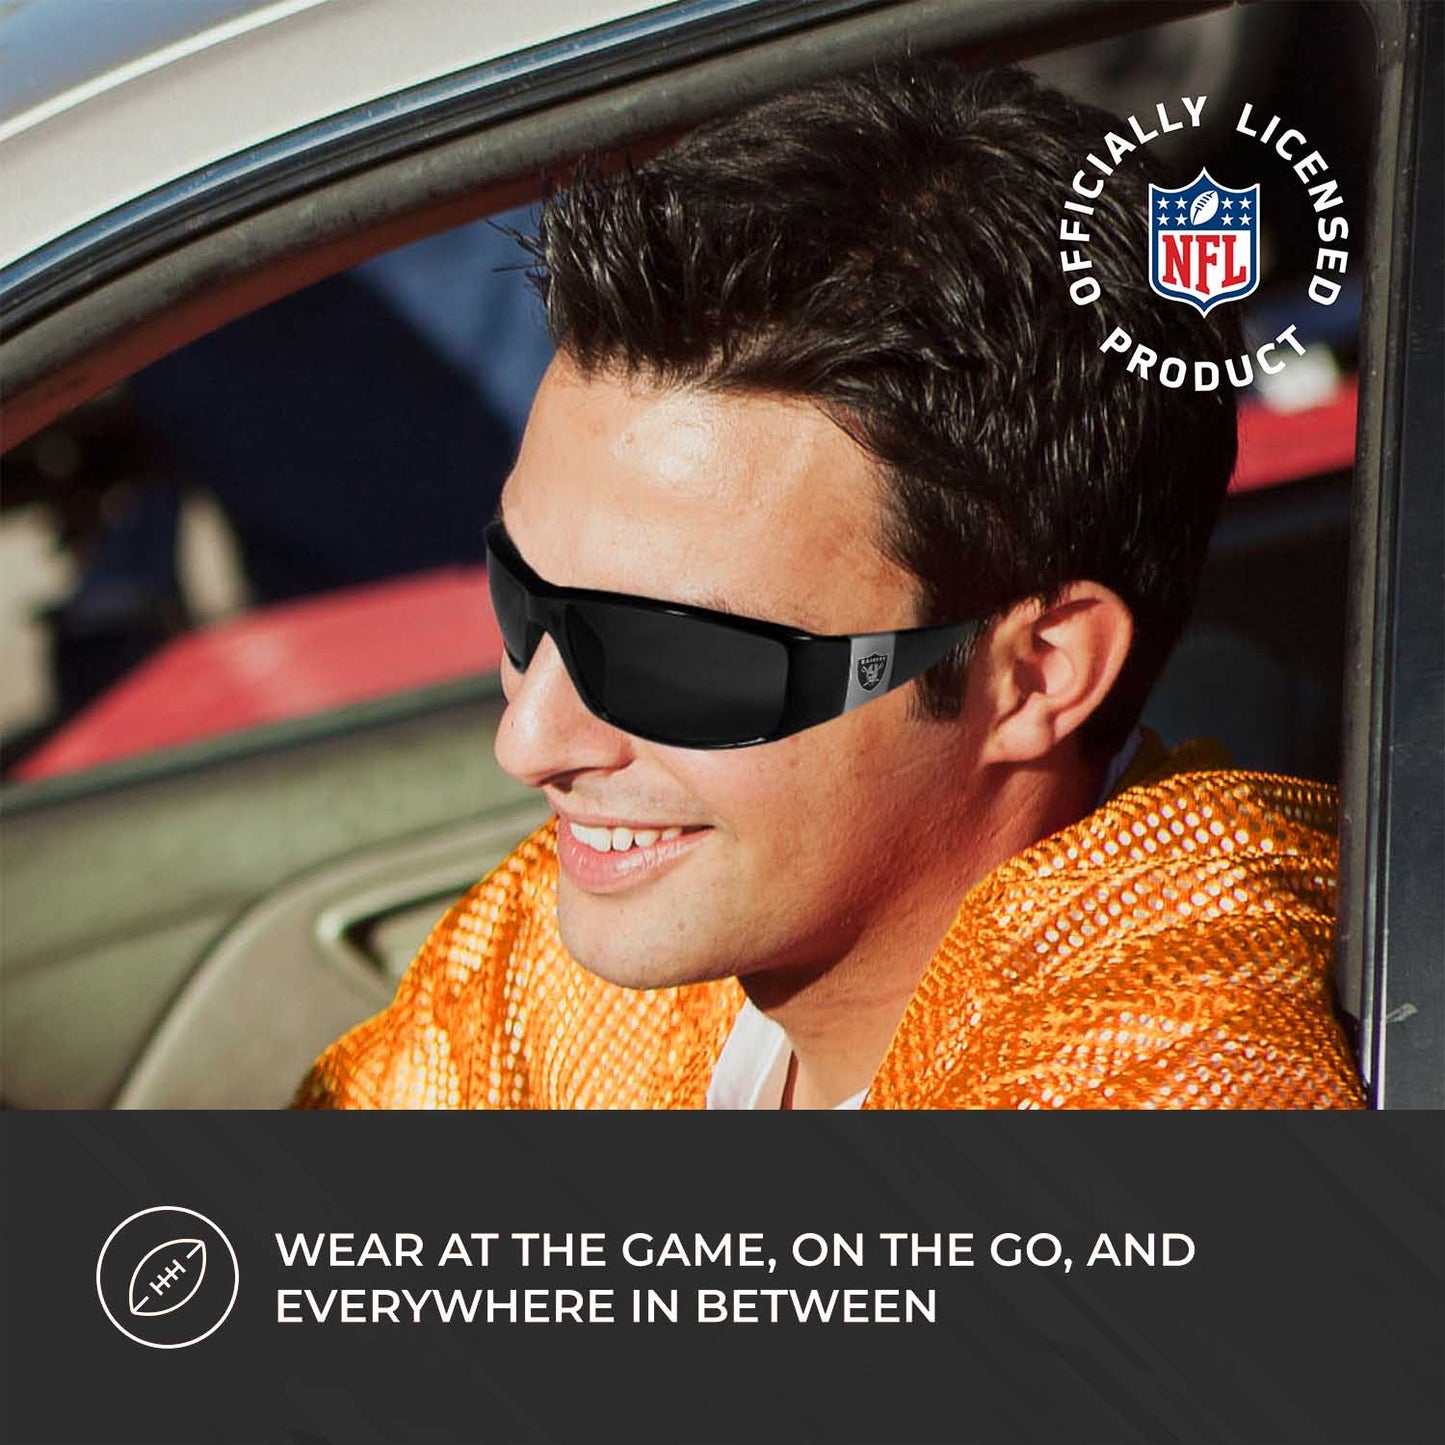 Las Vegas Raiders NFL Black Chrome Sunglasses with Visor Clip Bundle - Black